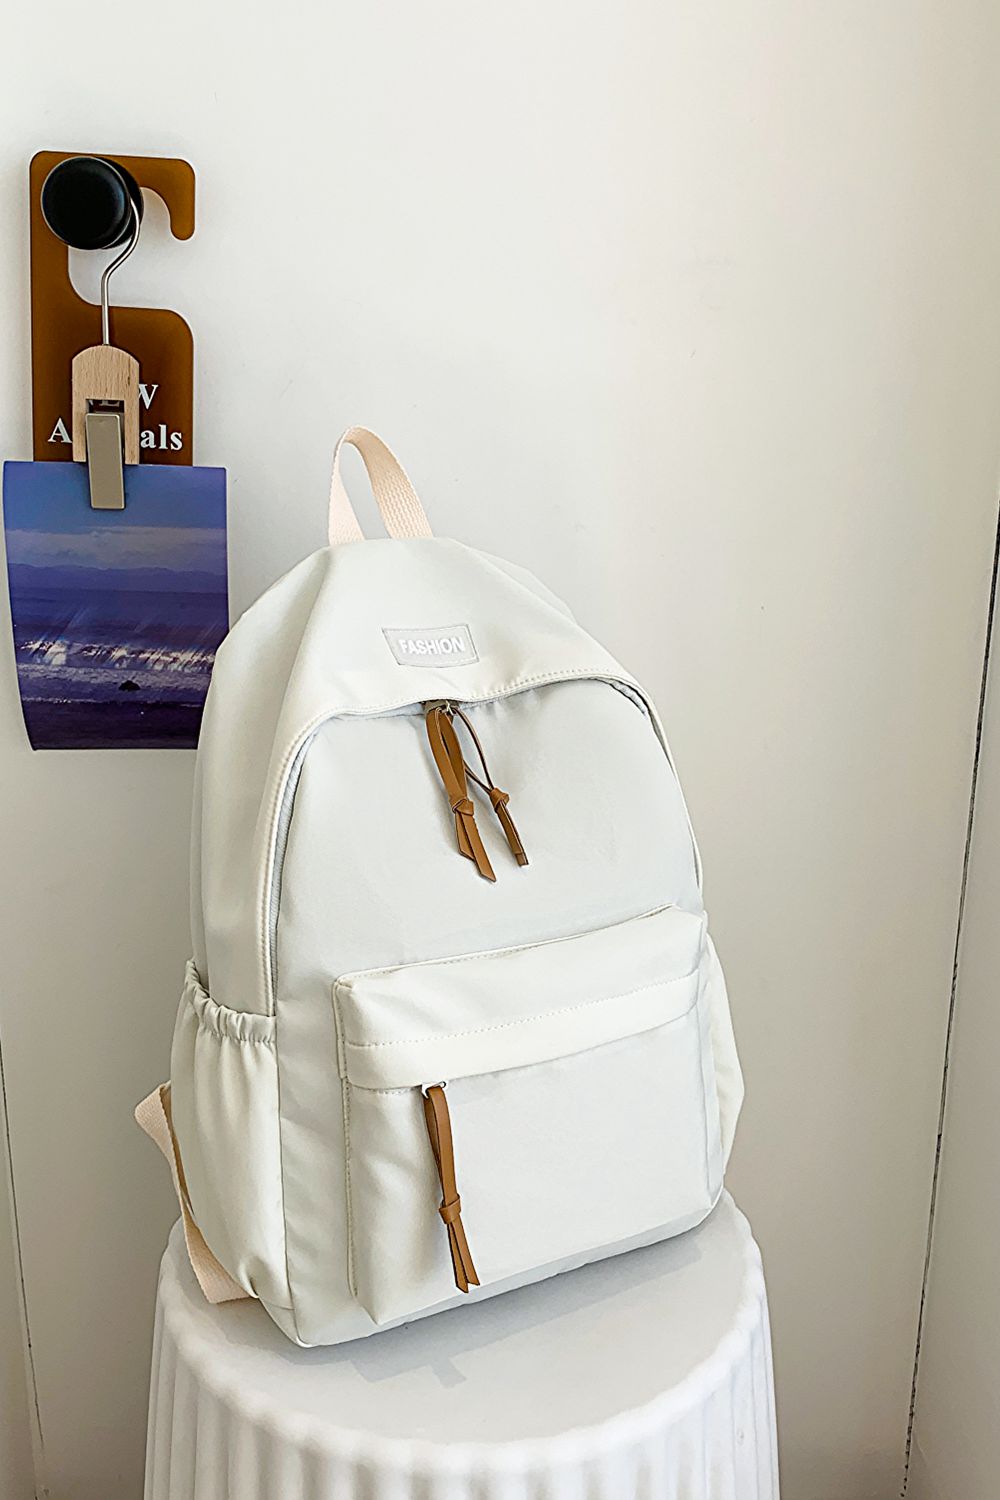 LouisWill Women Backpacks Shoulder Bags Korean Style Travel Bags